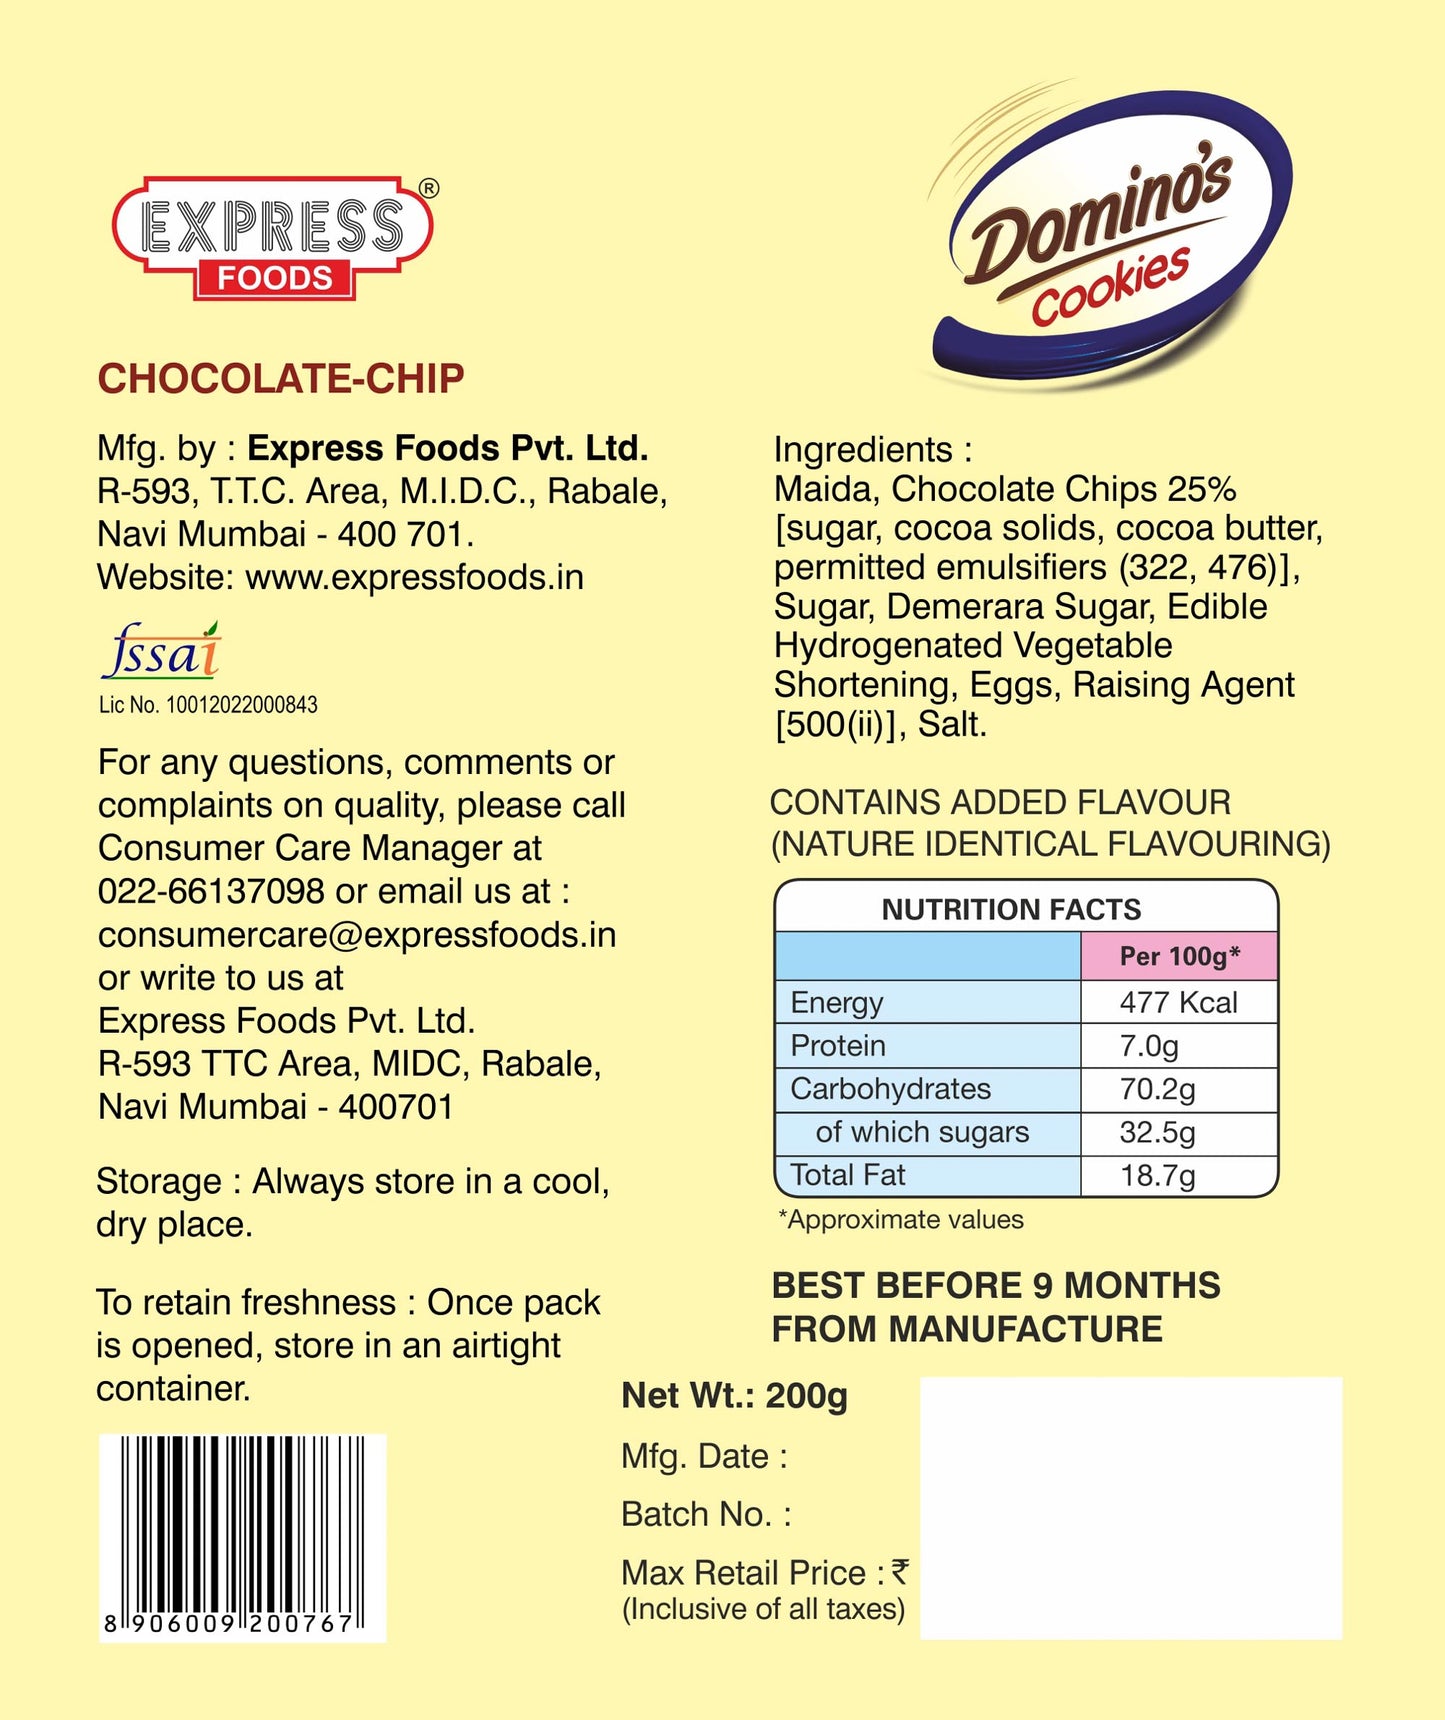 Domino's Chocolate Chip Cookies